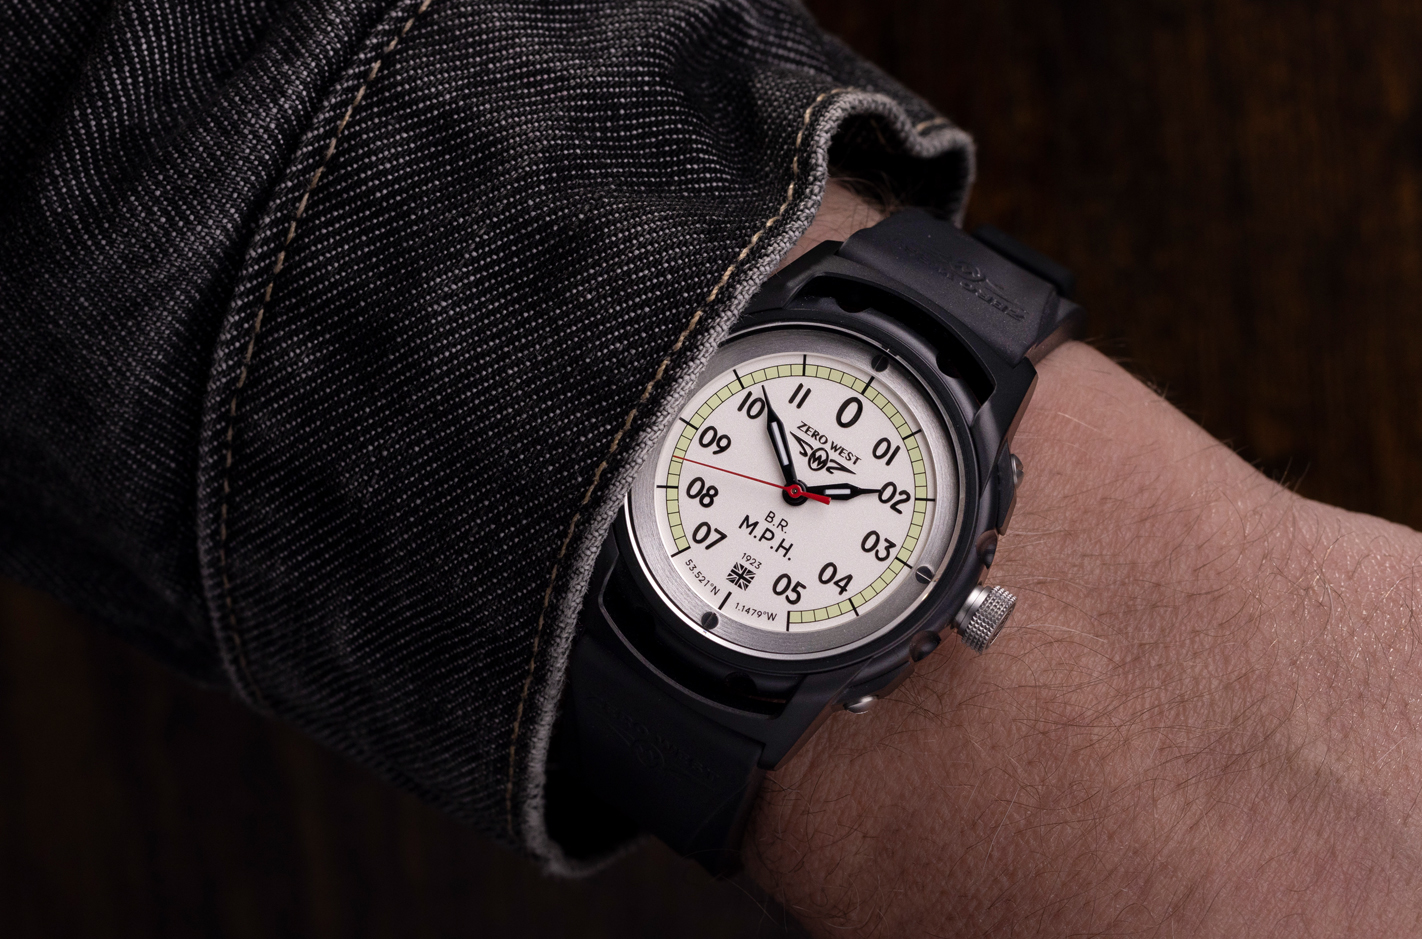 FS-1 watch wrist shot